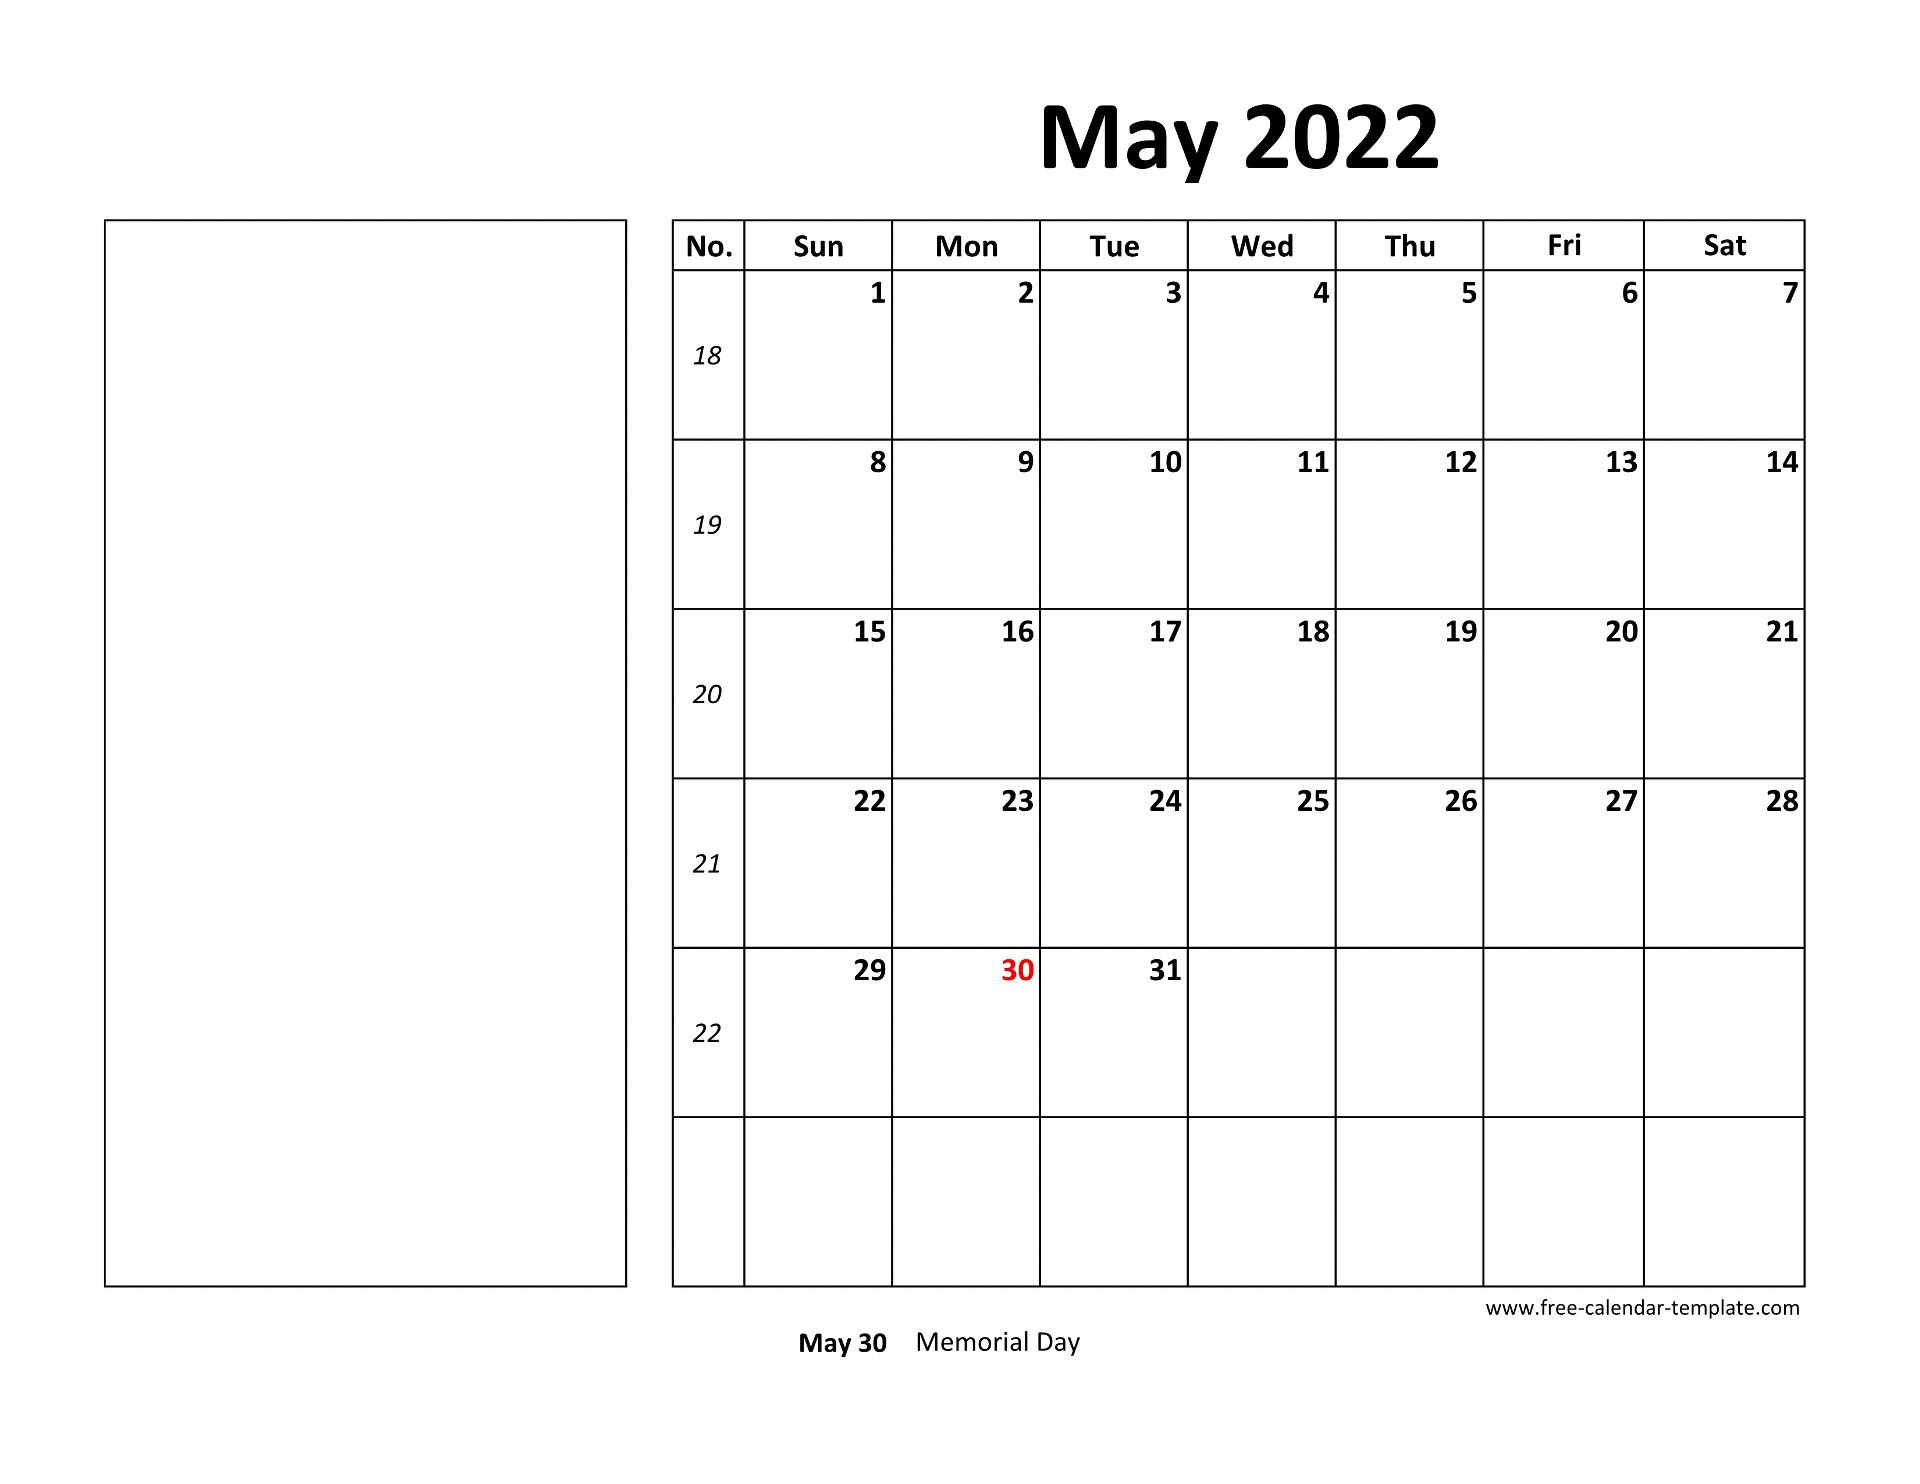 May 2022 Free Calendar Tempplate | Free-Calendar-Template